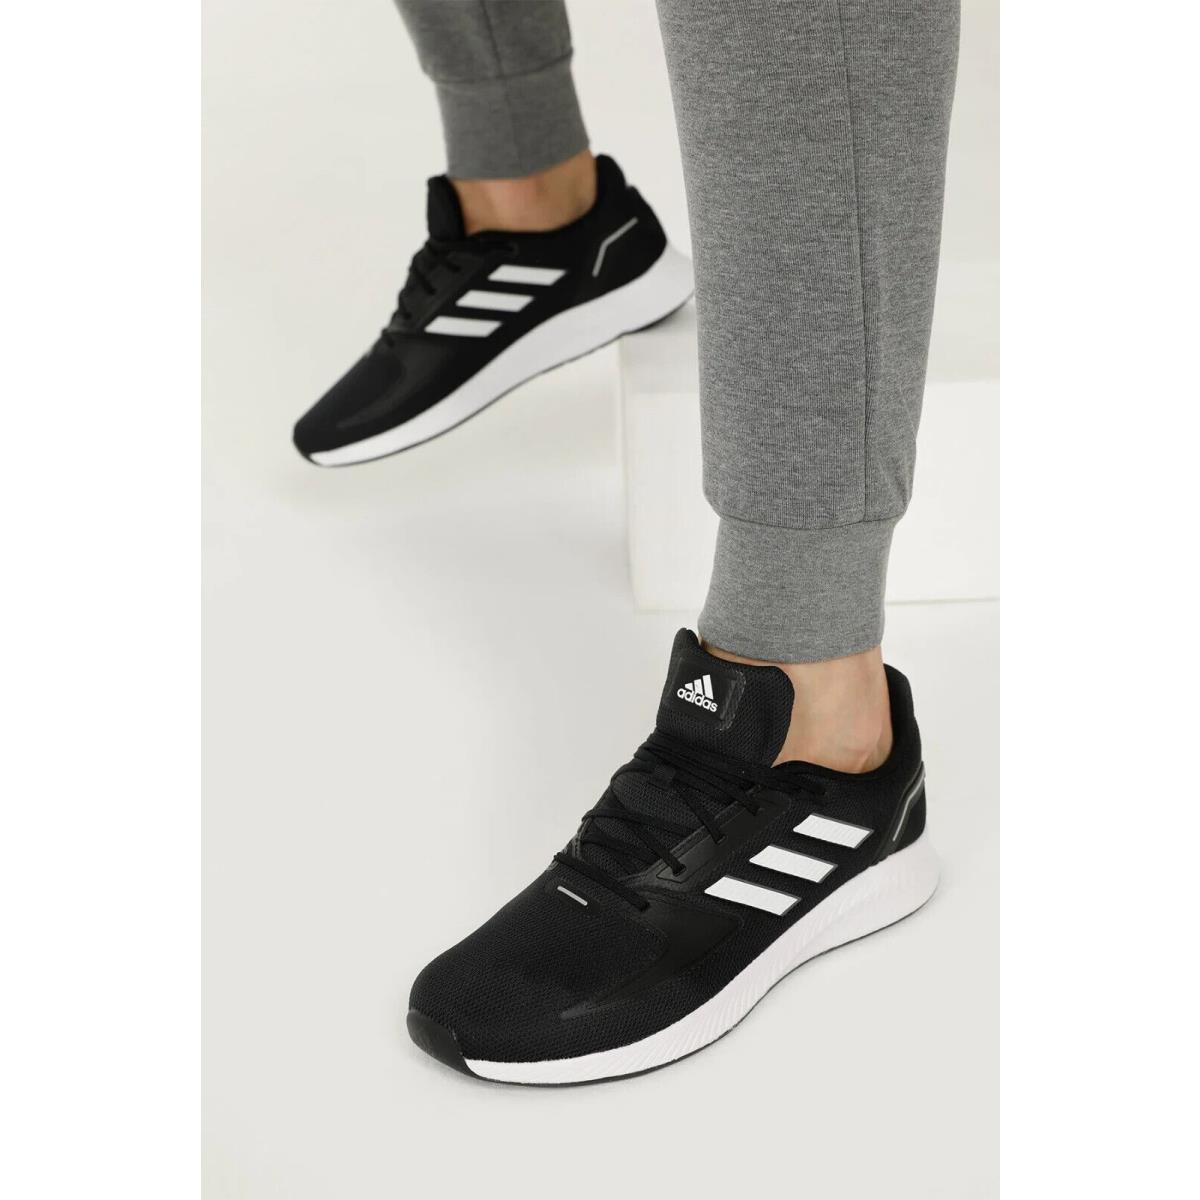 Adidas shoes RUNFALCON - Black/White 2